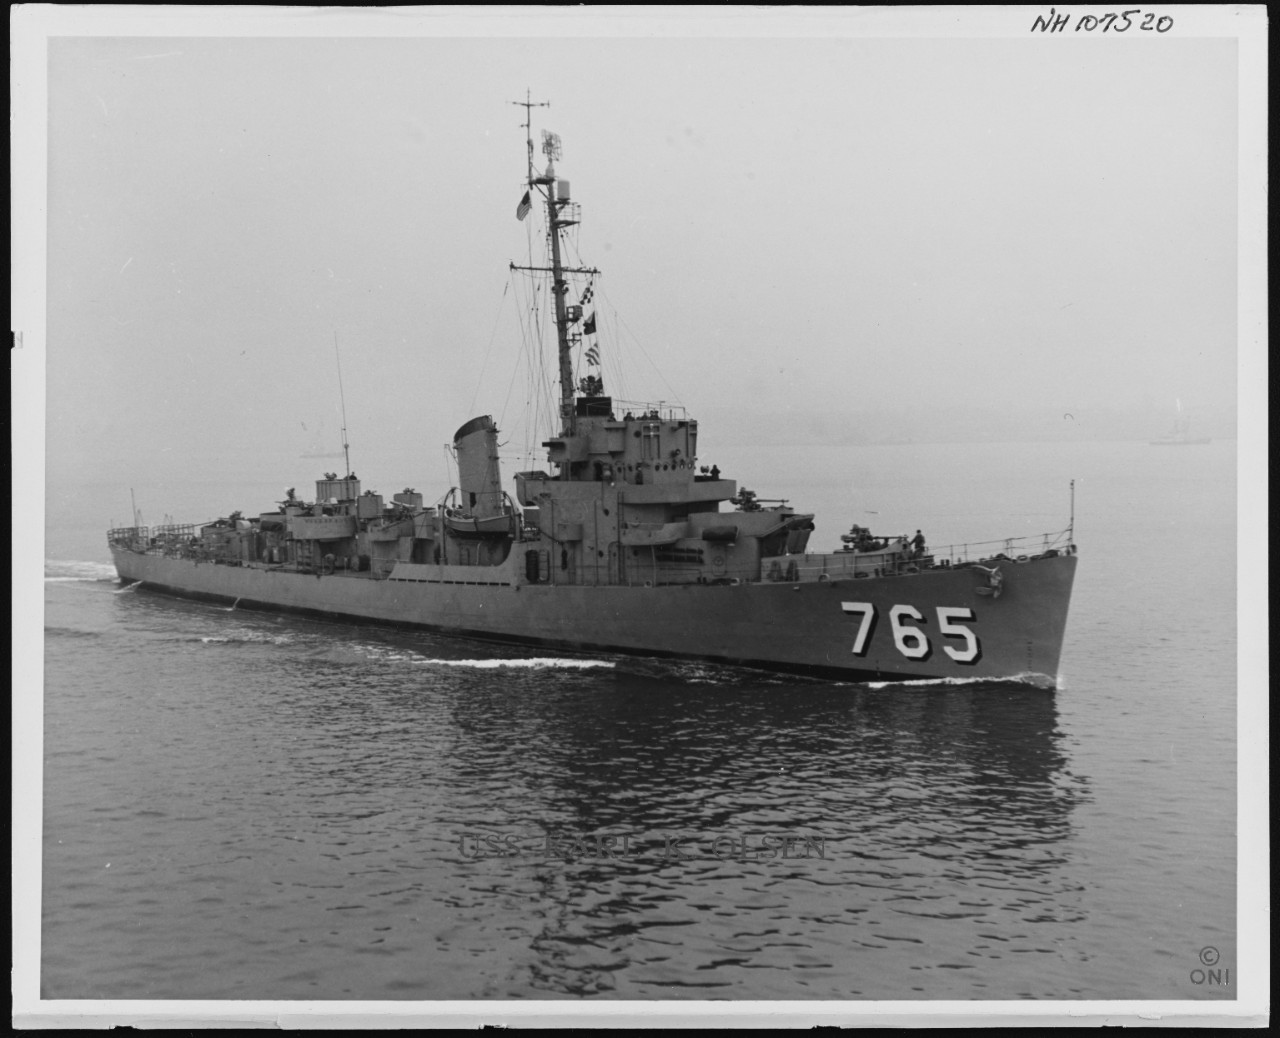 Photo #: NH 107520  USS Earl K. Olsen